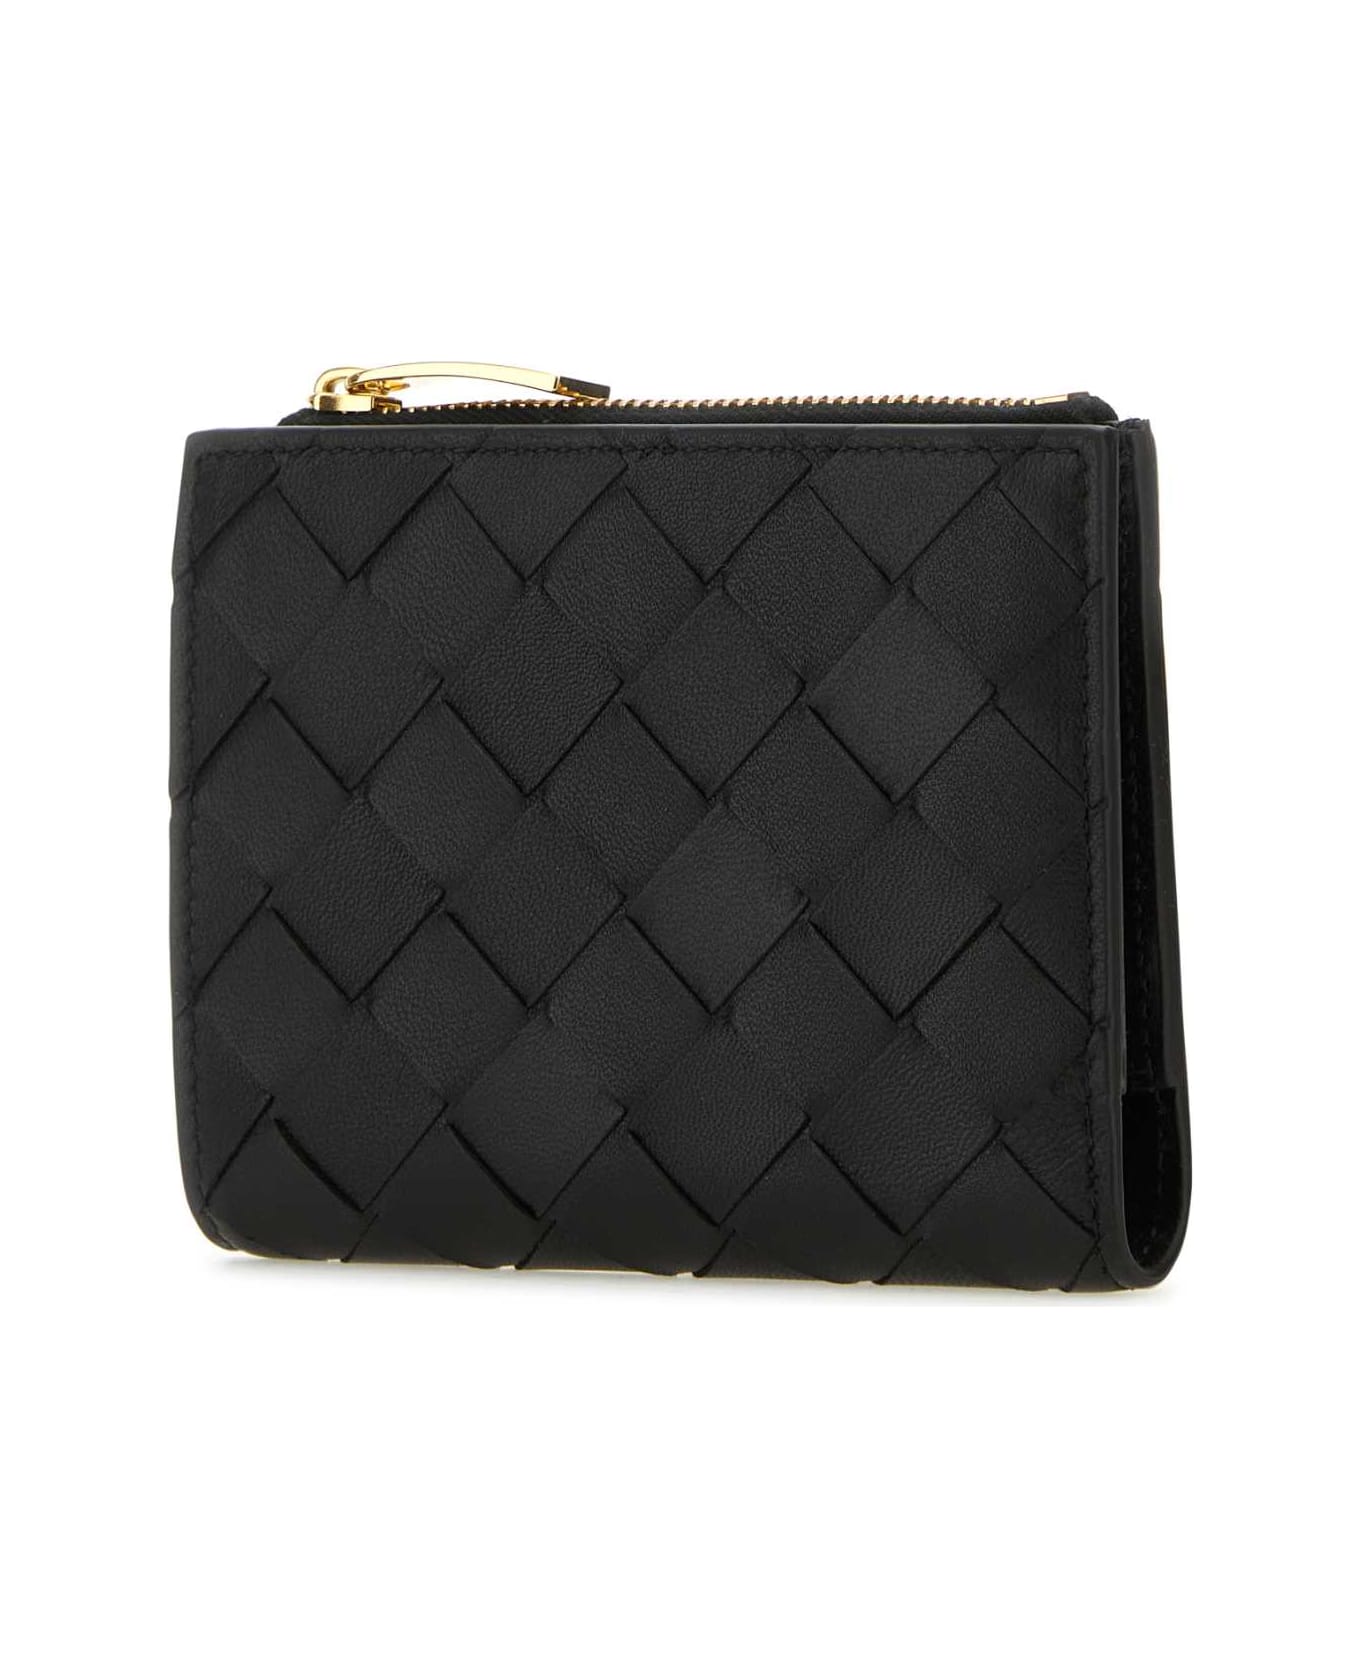 Bottega Veneta Black Leather Small Intrecciato Wallet - BLACK 財布